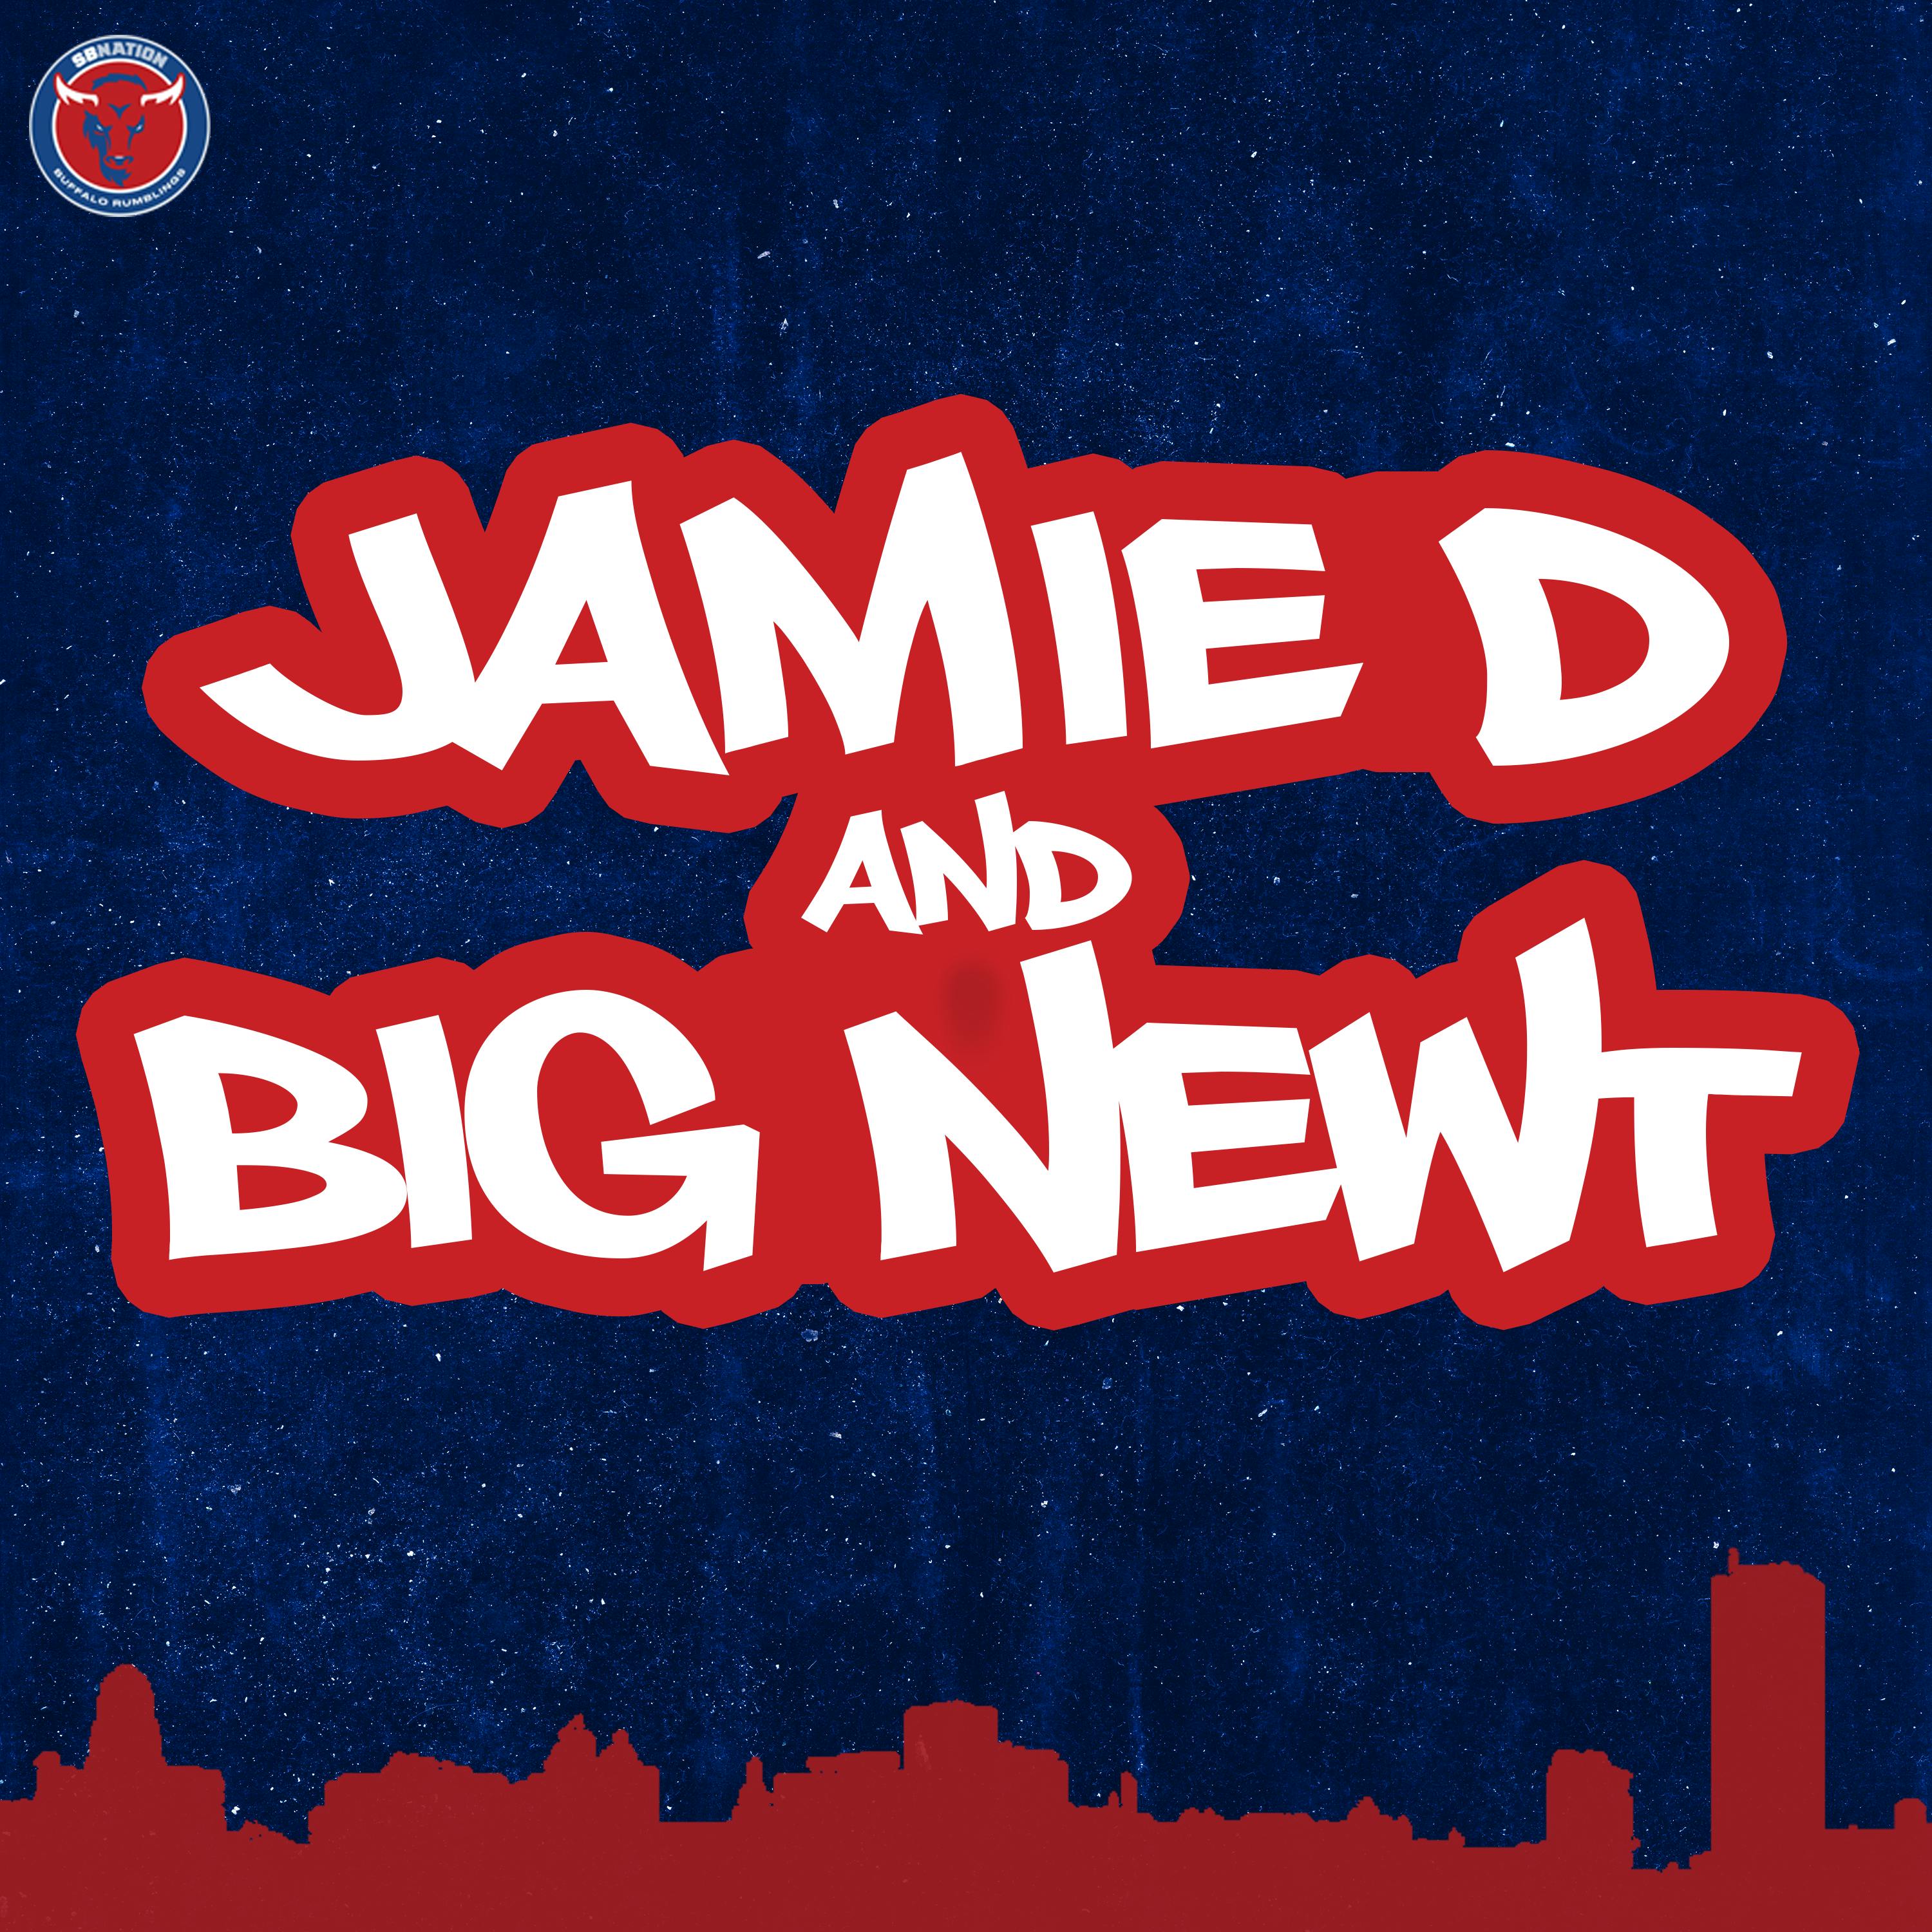 Jamie D & Big Newt: Are Bills best team in AFC?